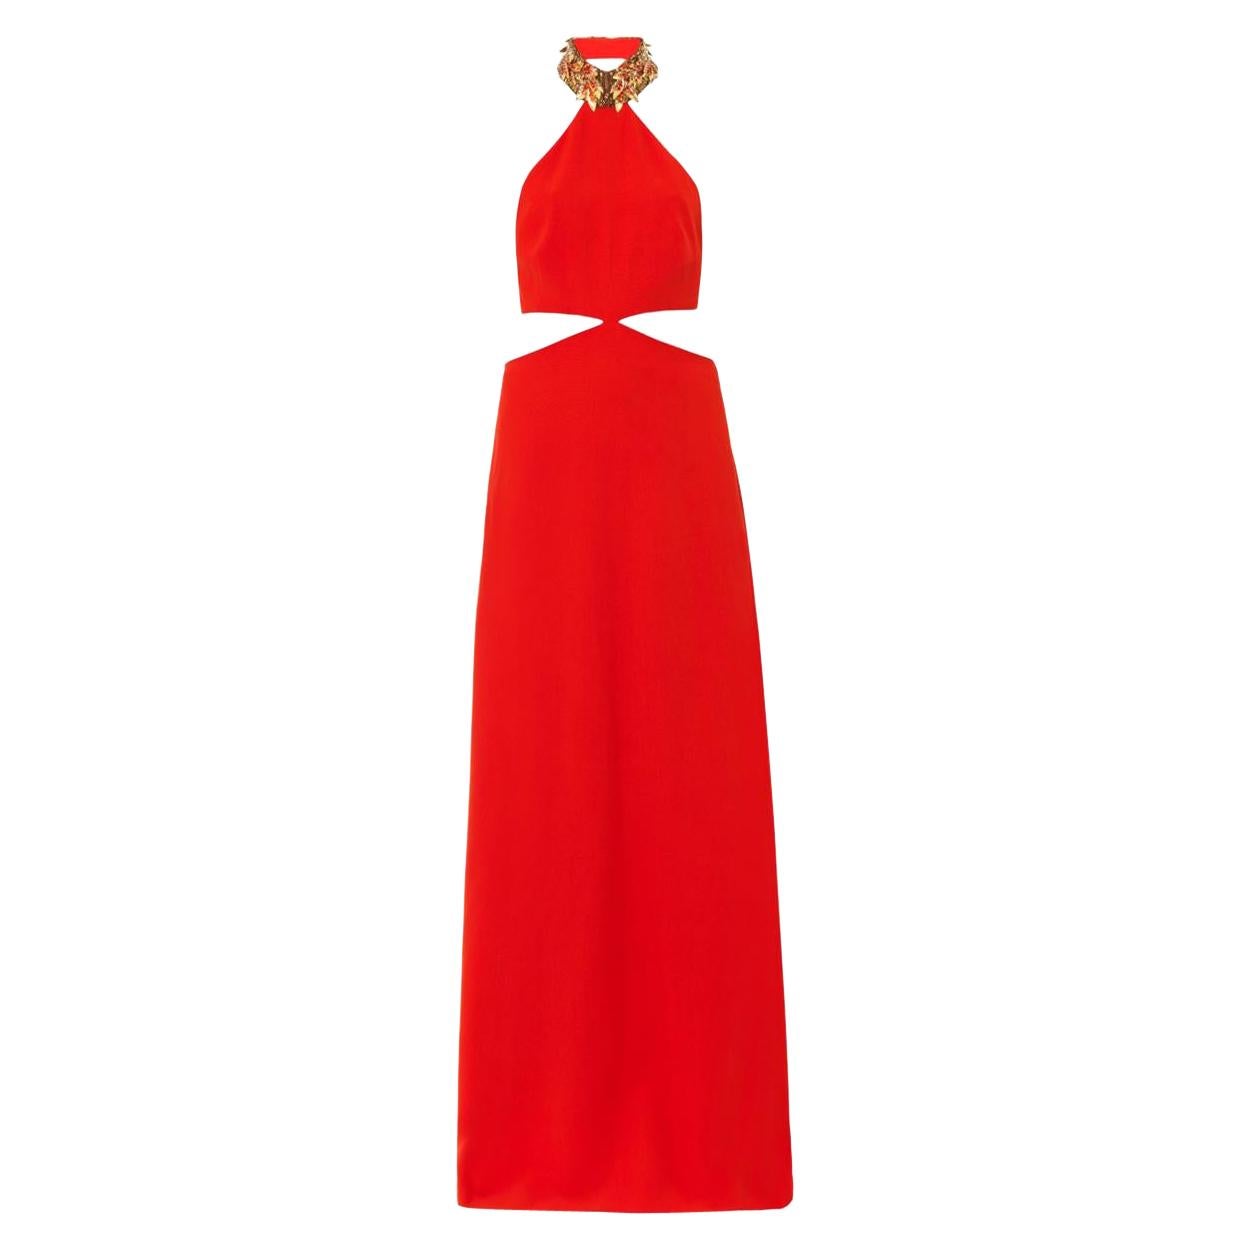 Alexander McQueen Embellished Red Dress 